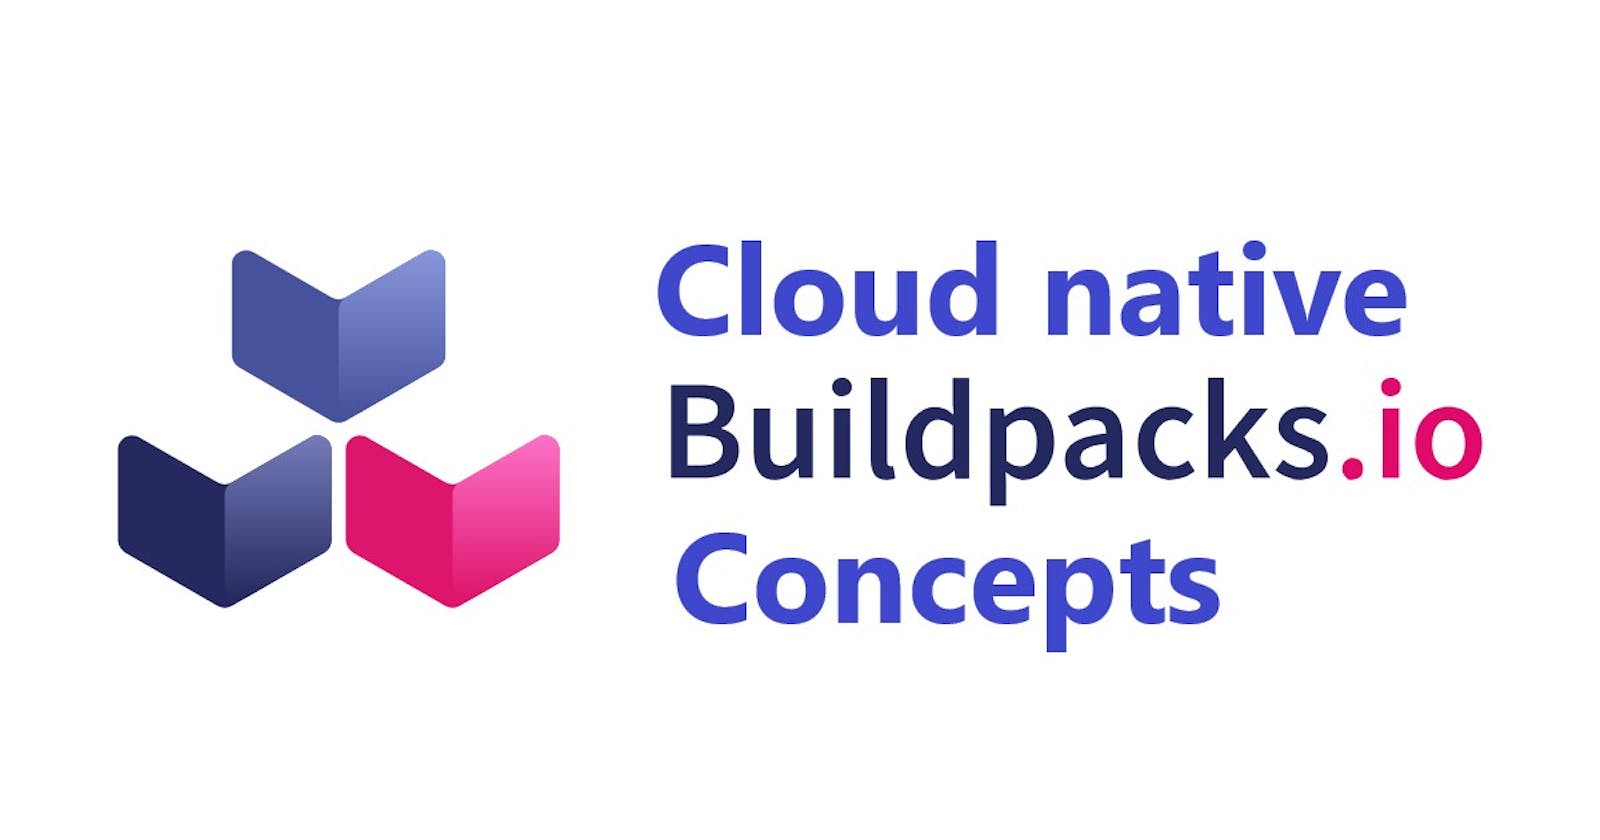 Cloud native buildpacks concepts